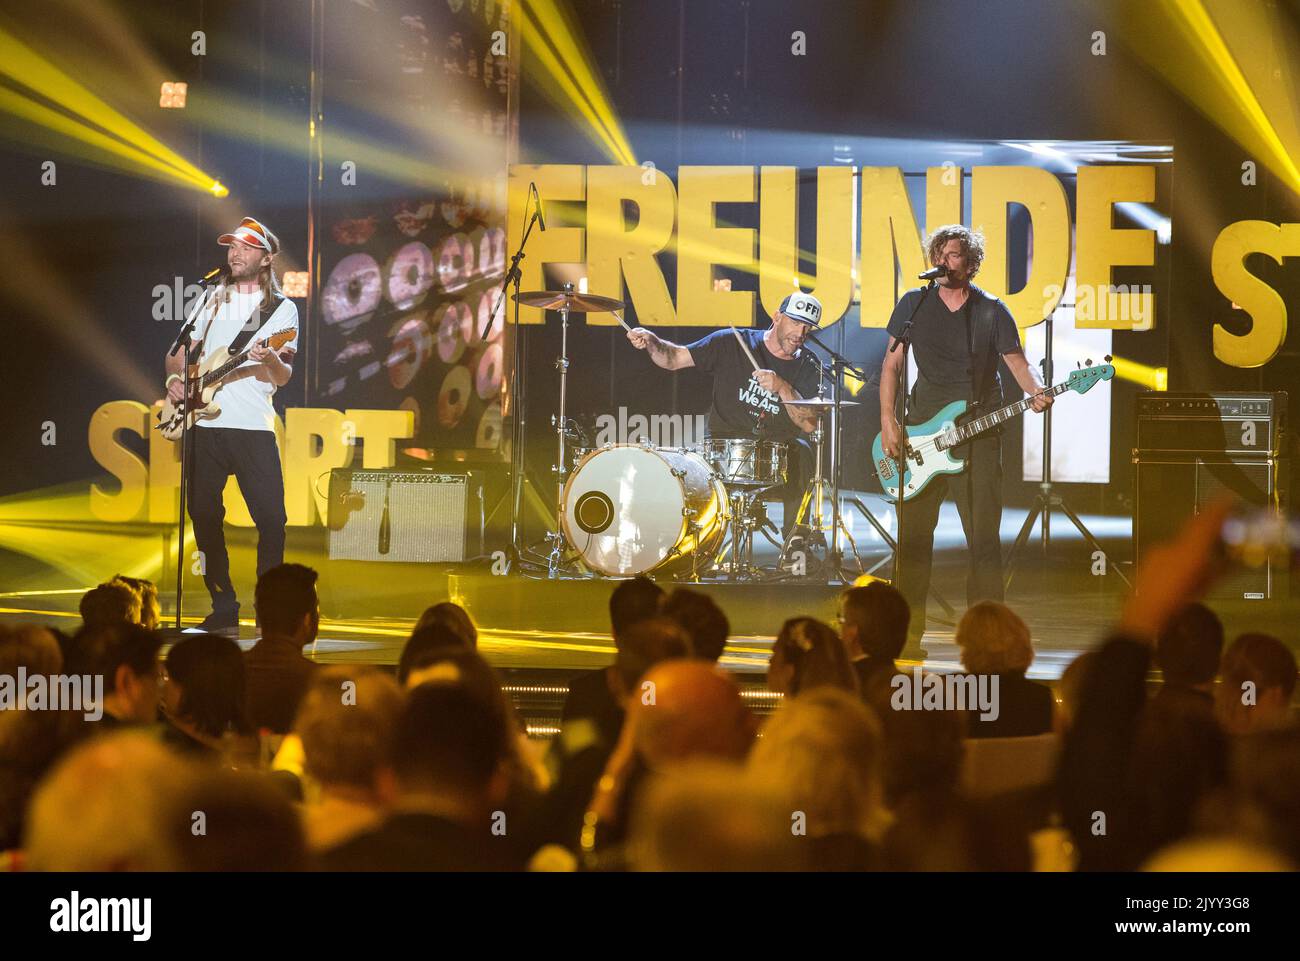 Hamburg, Germany. 08th Sep, 2022. The band Sportfreunde Stiller performs at the German Radio Award 2022 ceremony. Credit: Daniel Bockwoldt/dpa/Alamy Live News Stock Photo